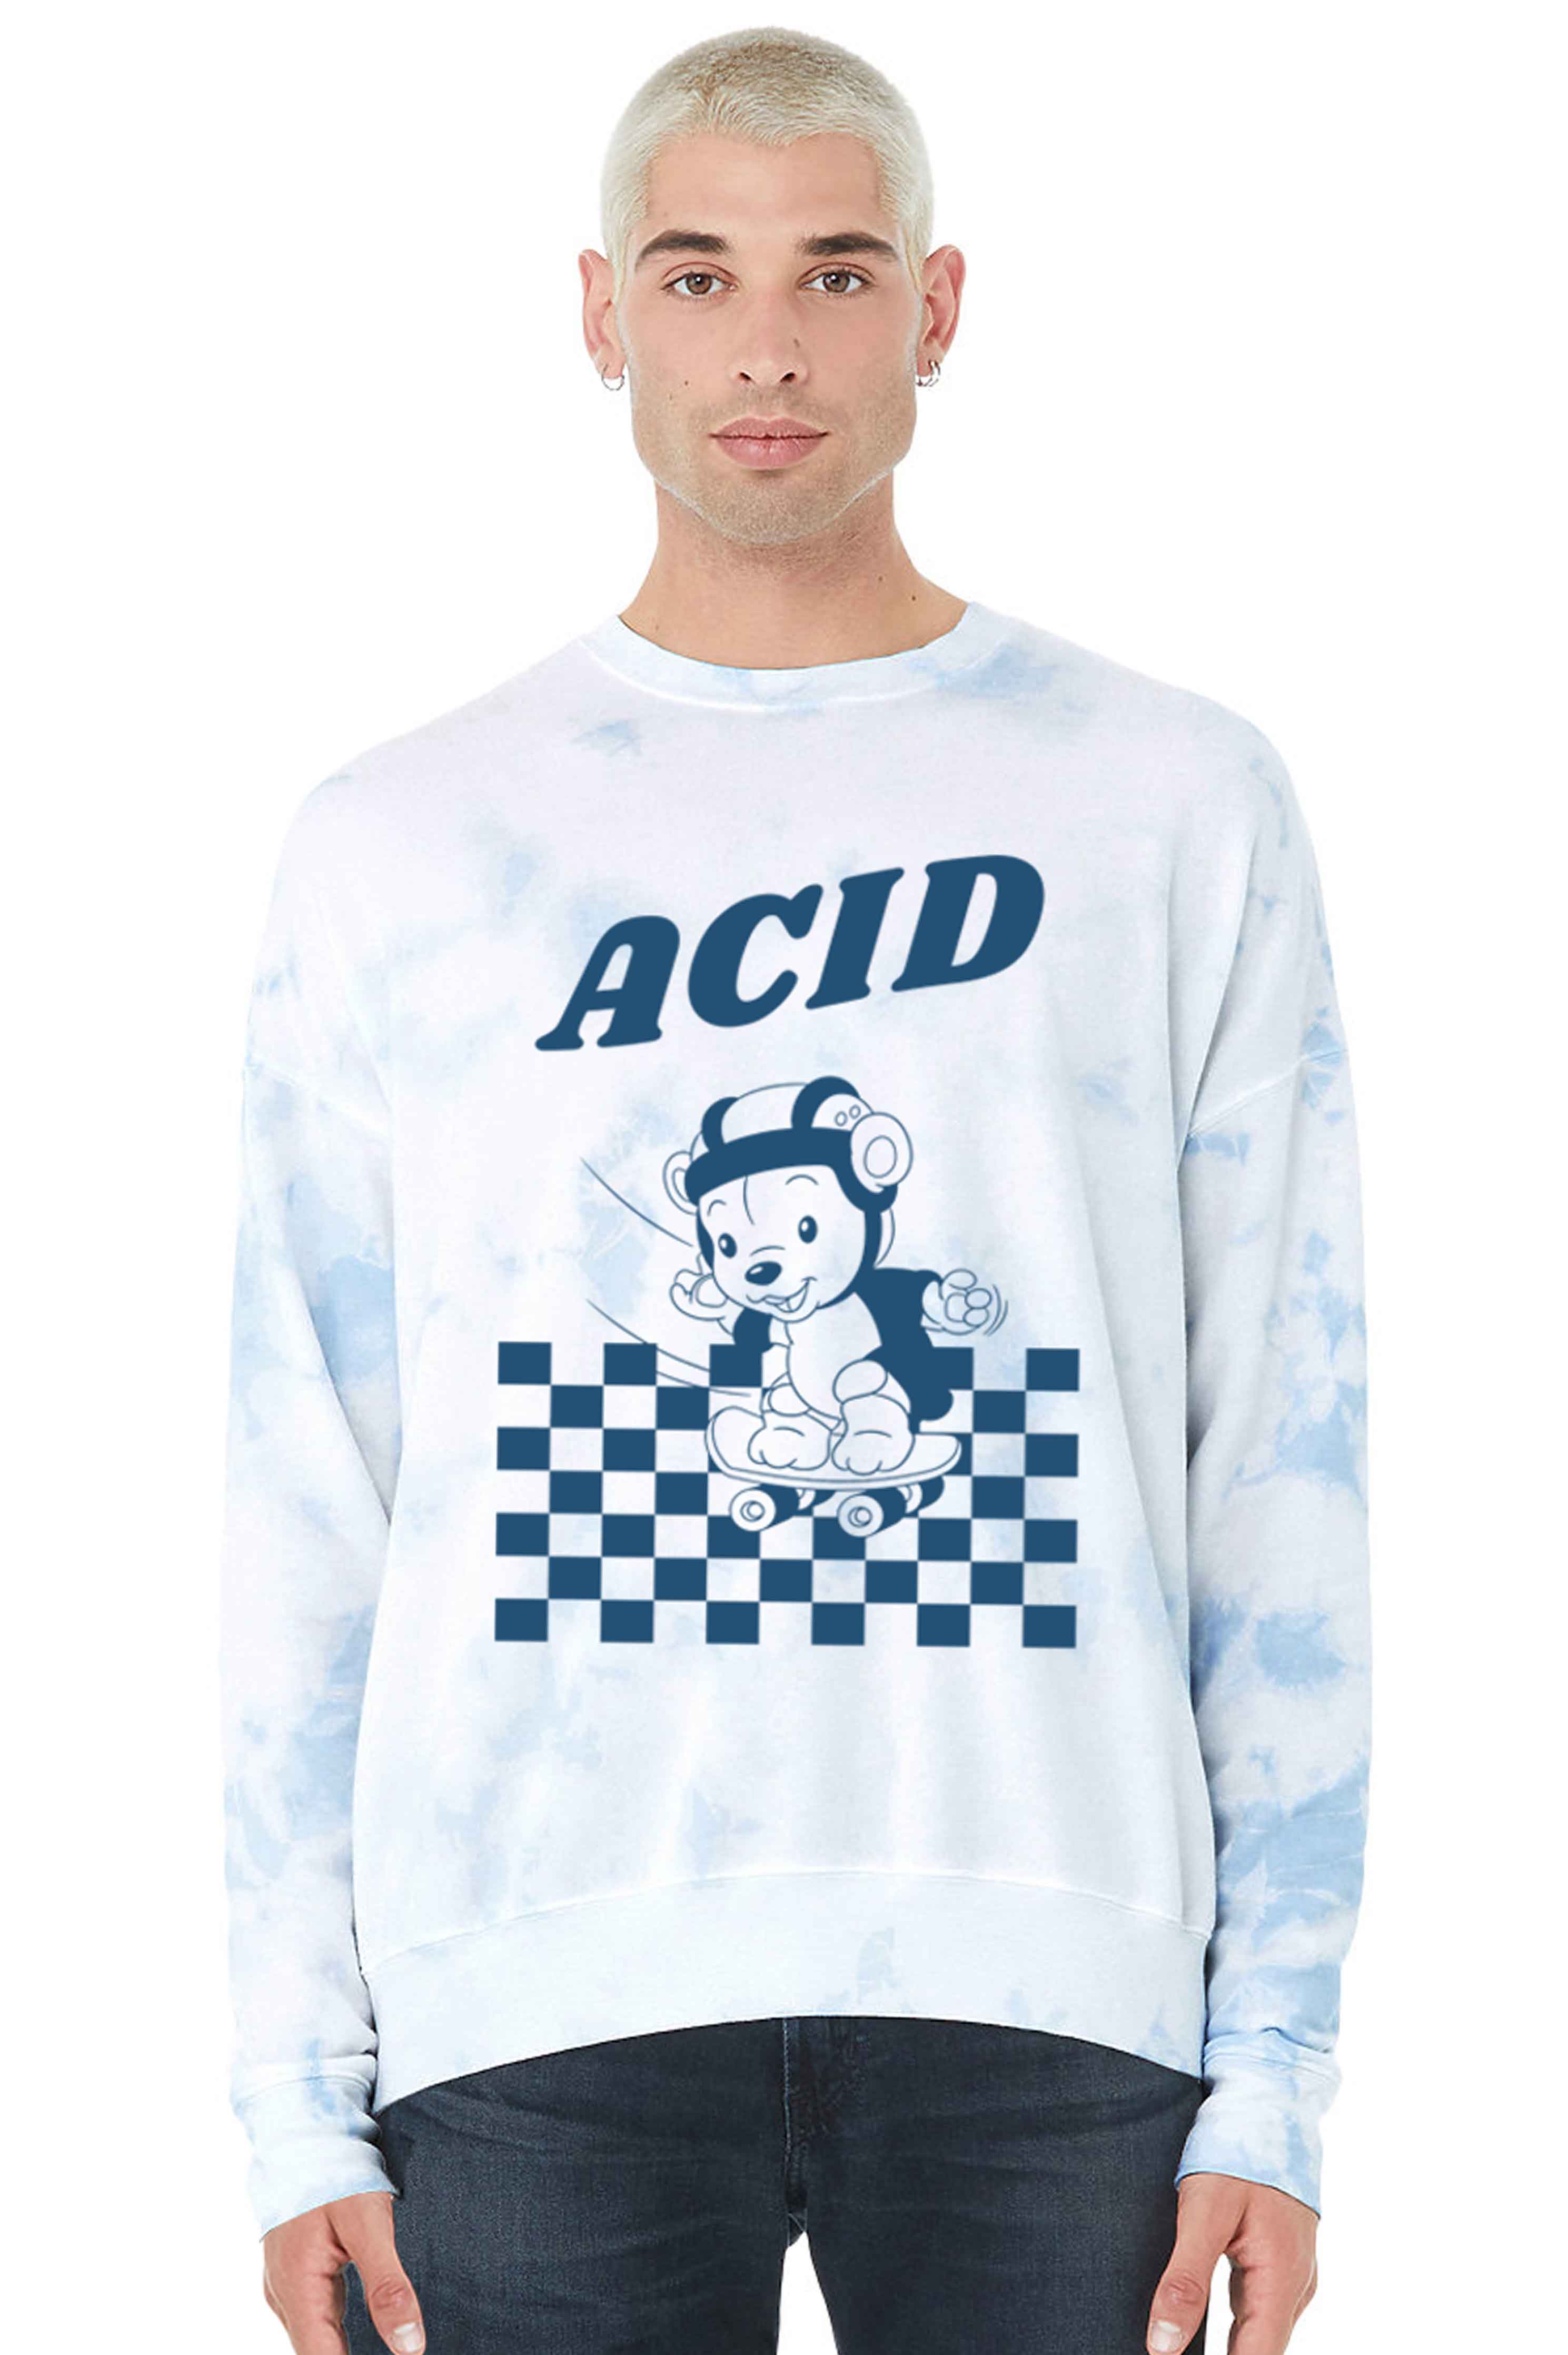 FM Acid Bear L/S Sweatshirt